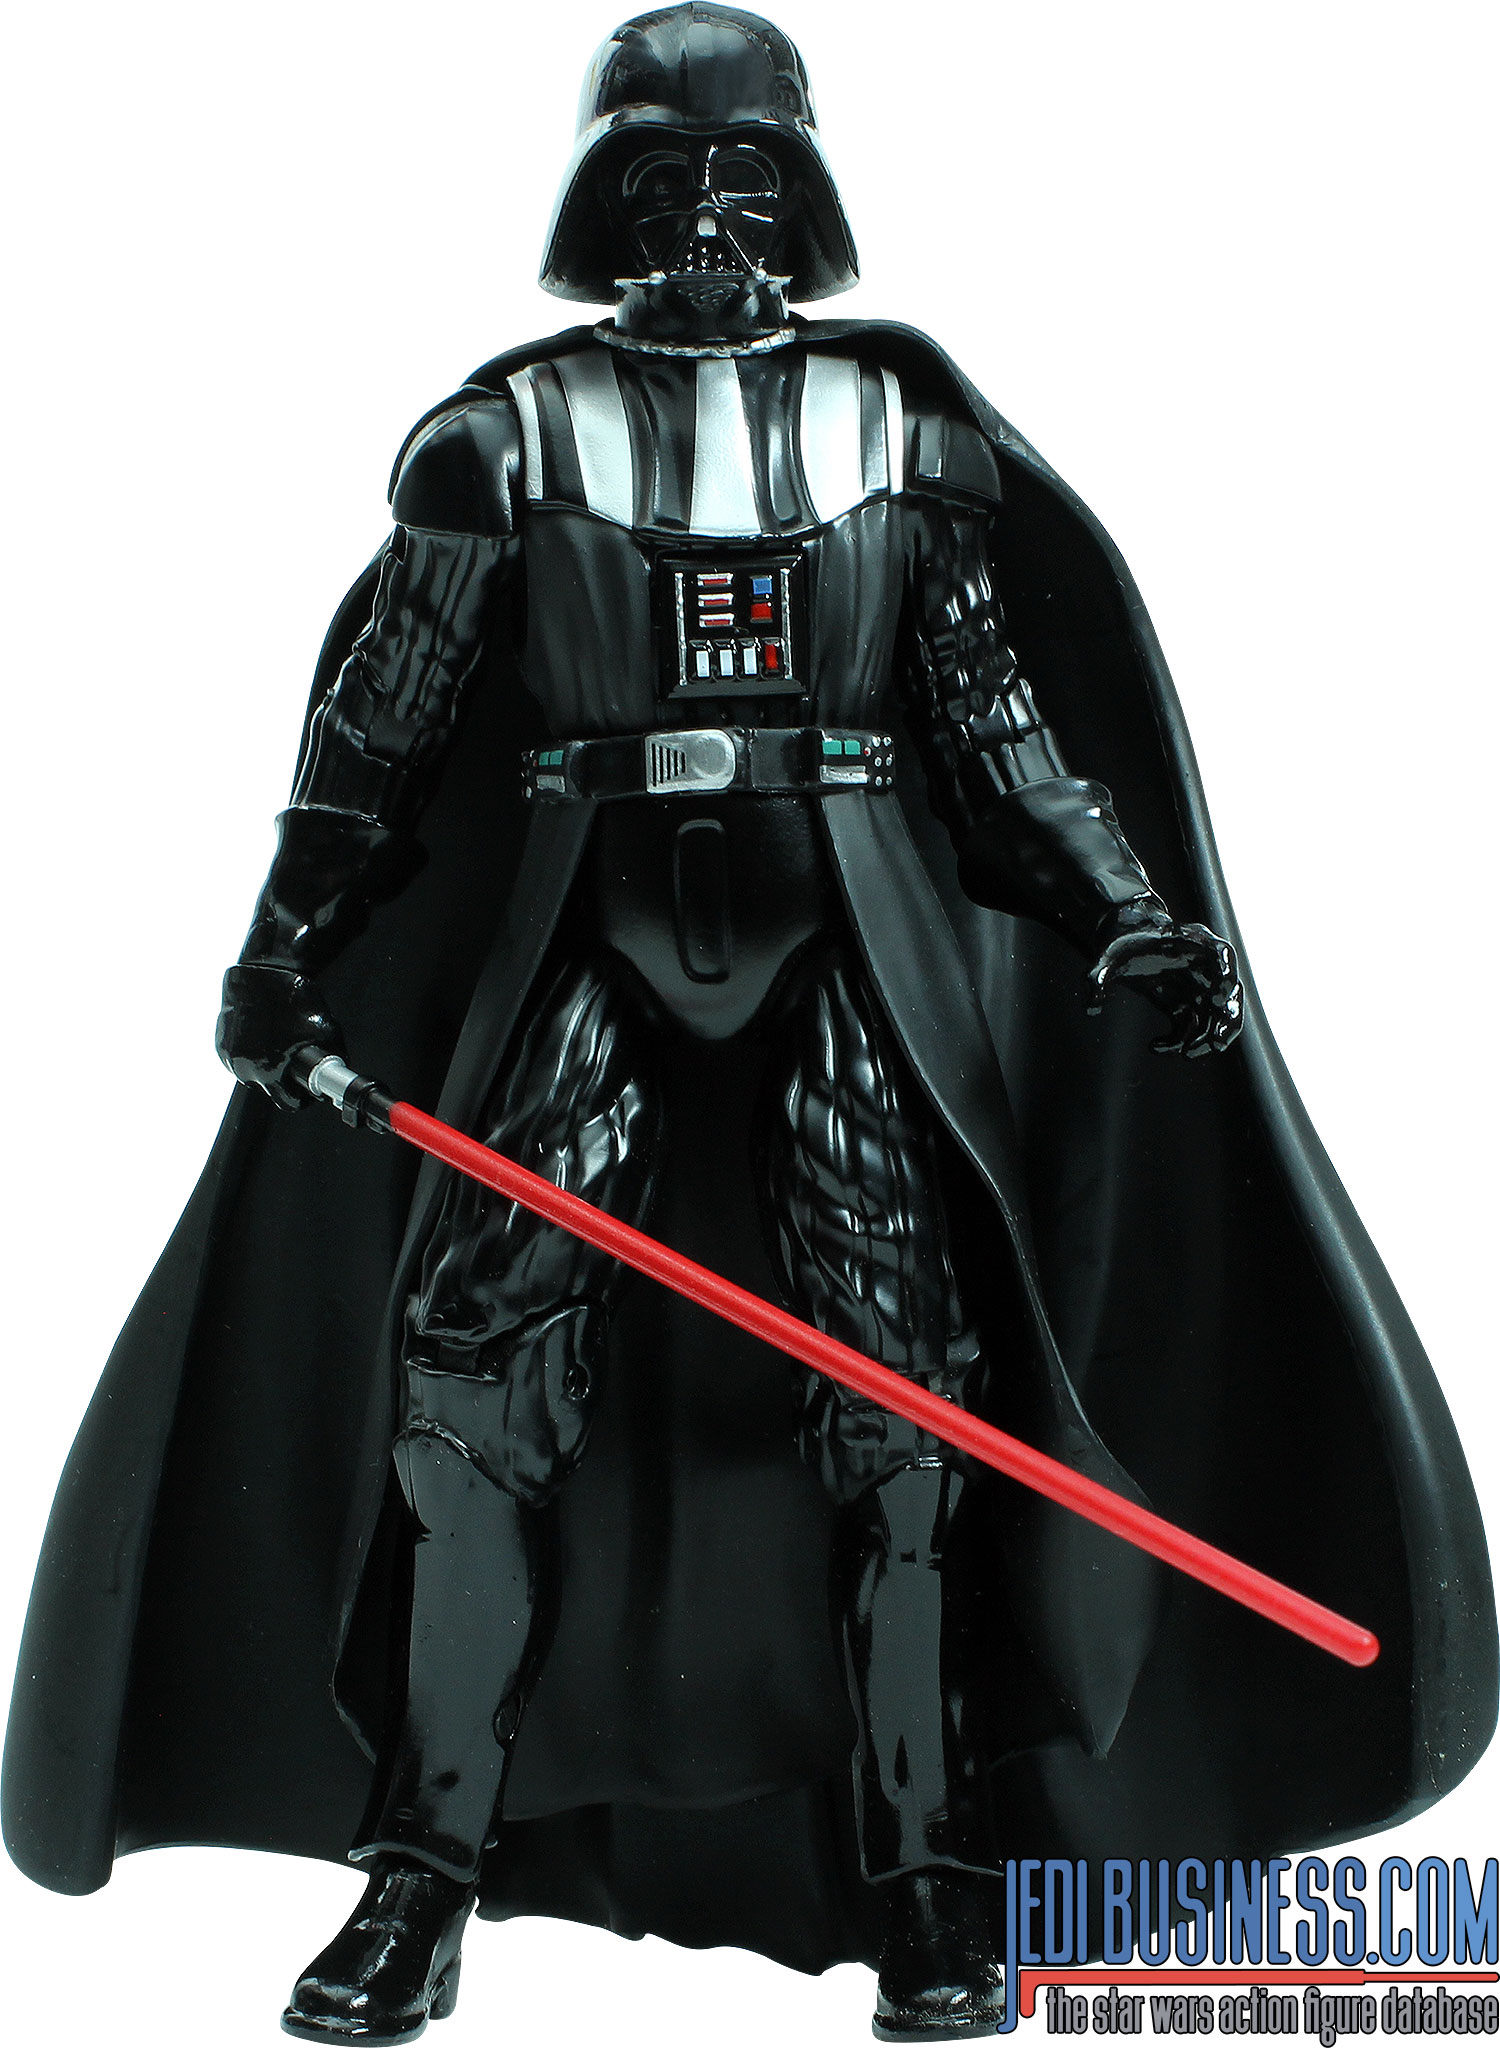 Darth Vader D23 8-Pack 2015